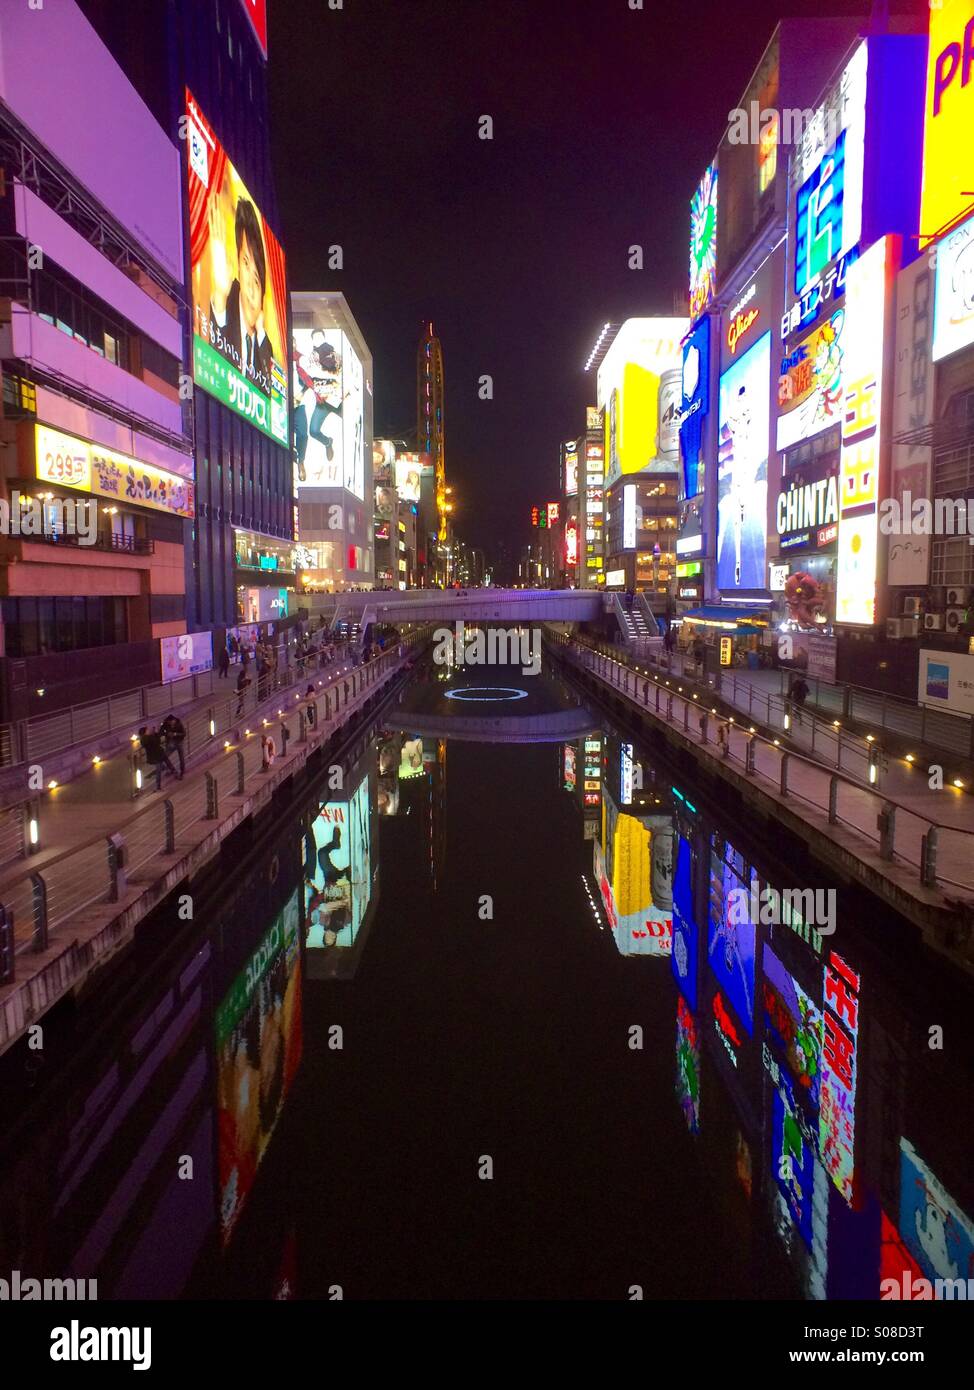 Dotonbori district at night, colorful neon signs, Chuo-ko, Osaka, Japan Stock Photo